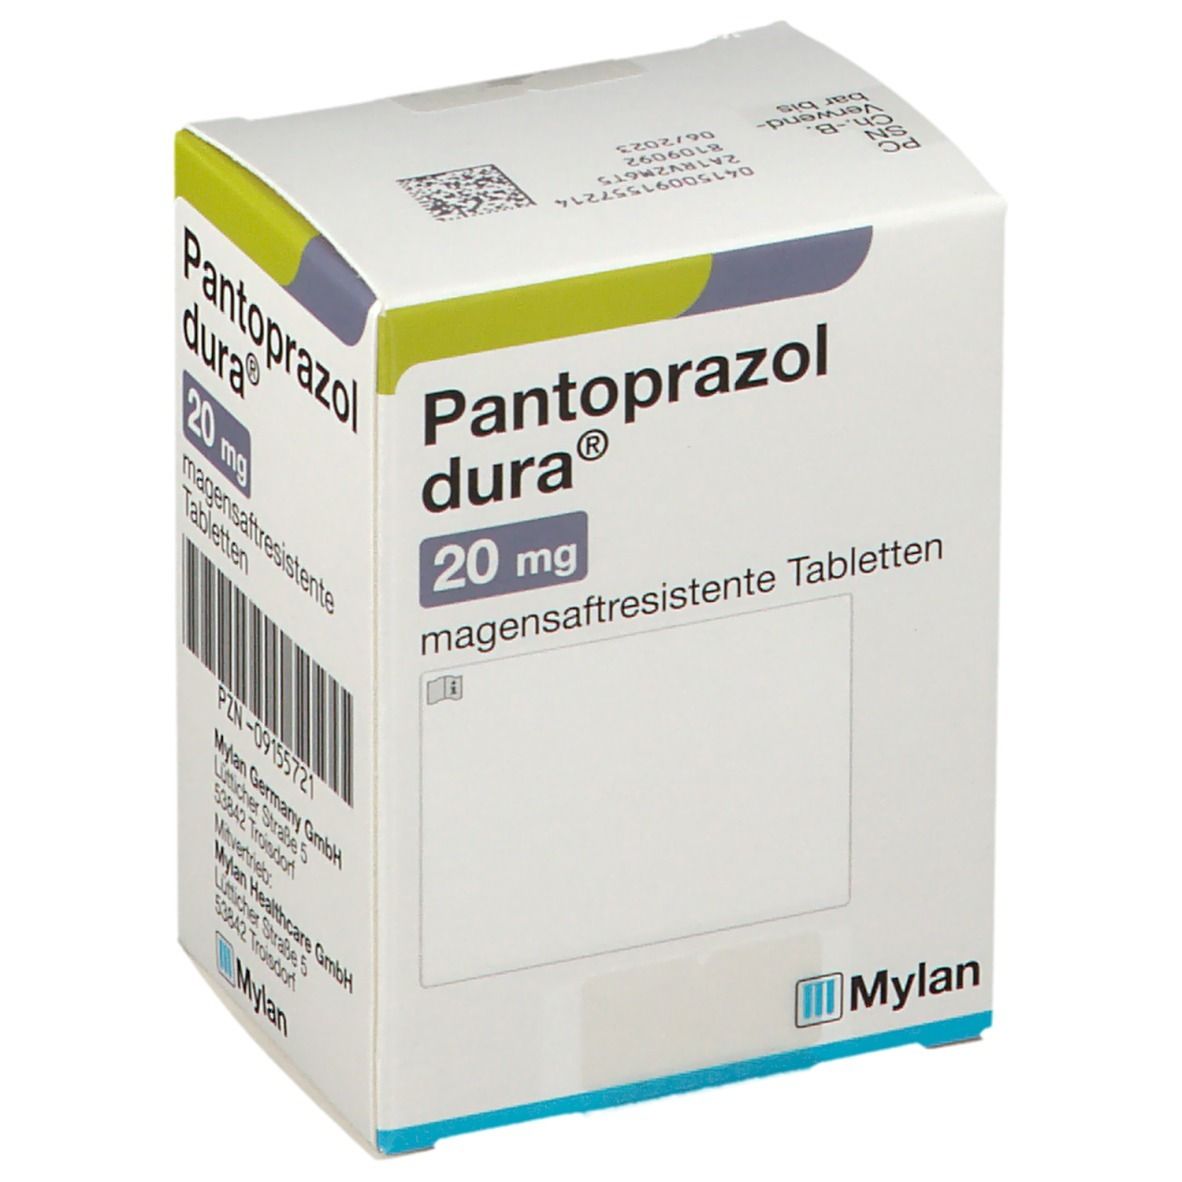 Pantoprazol dura® 20 mg